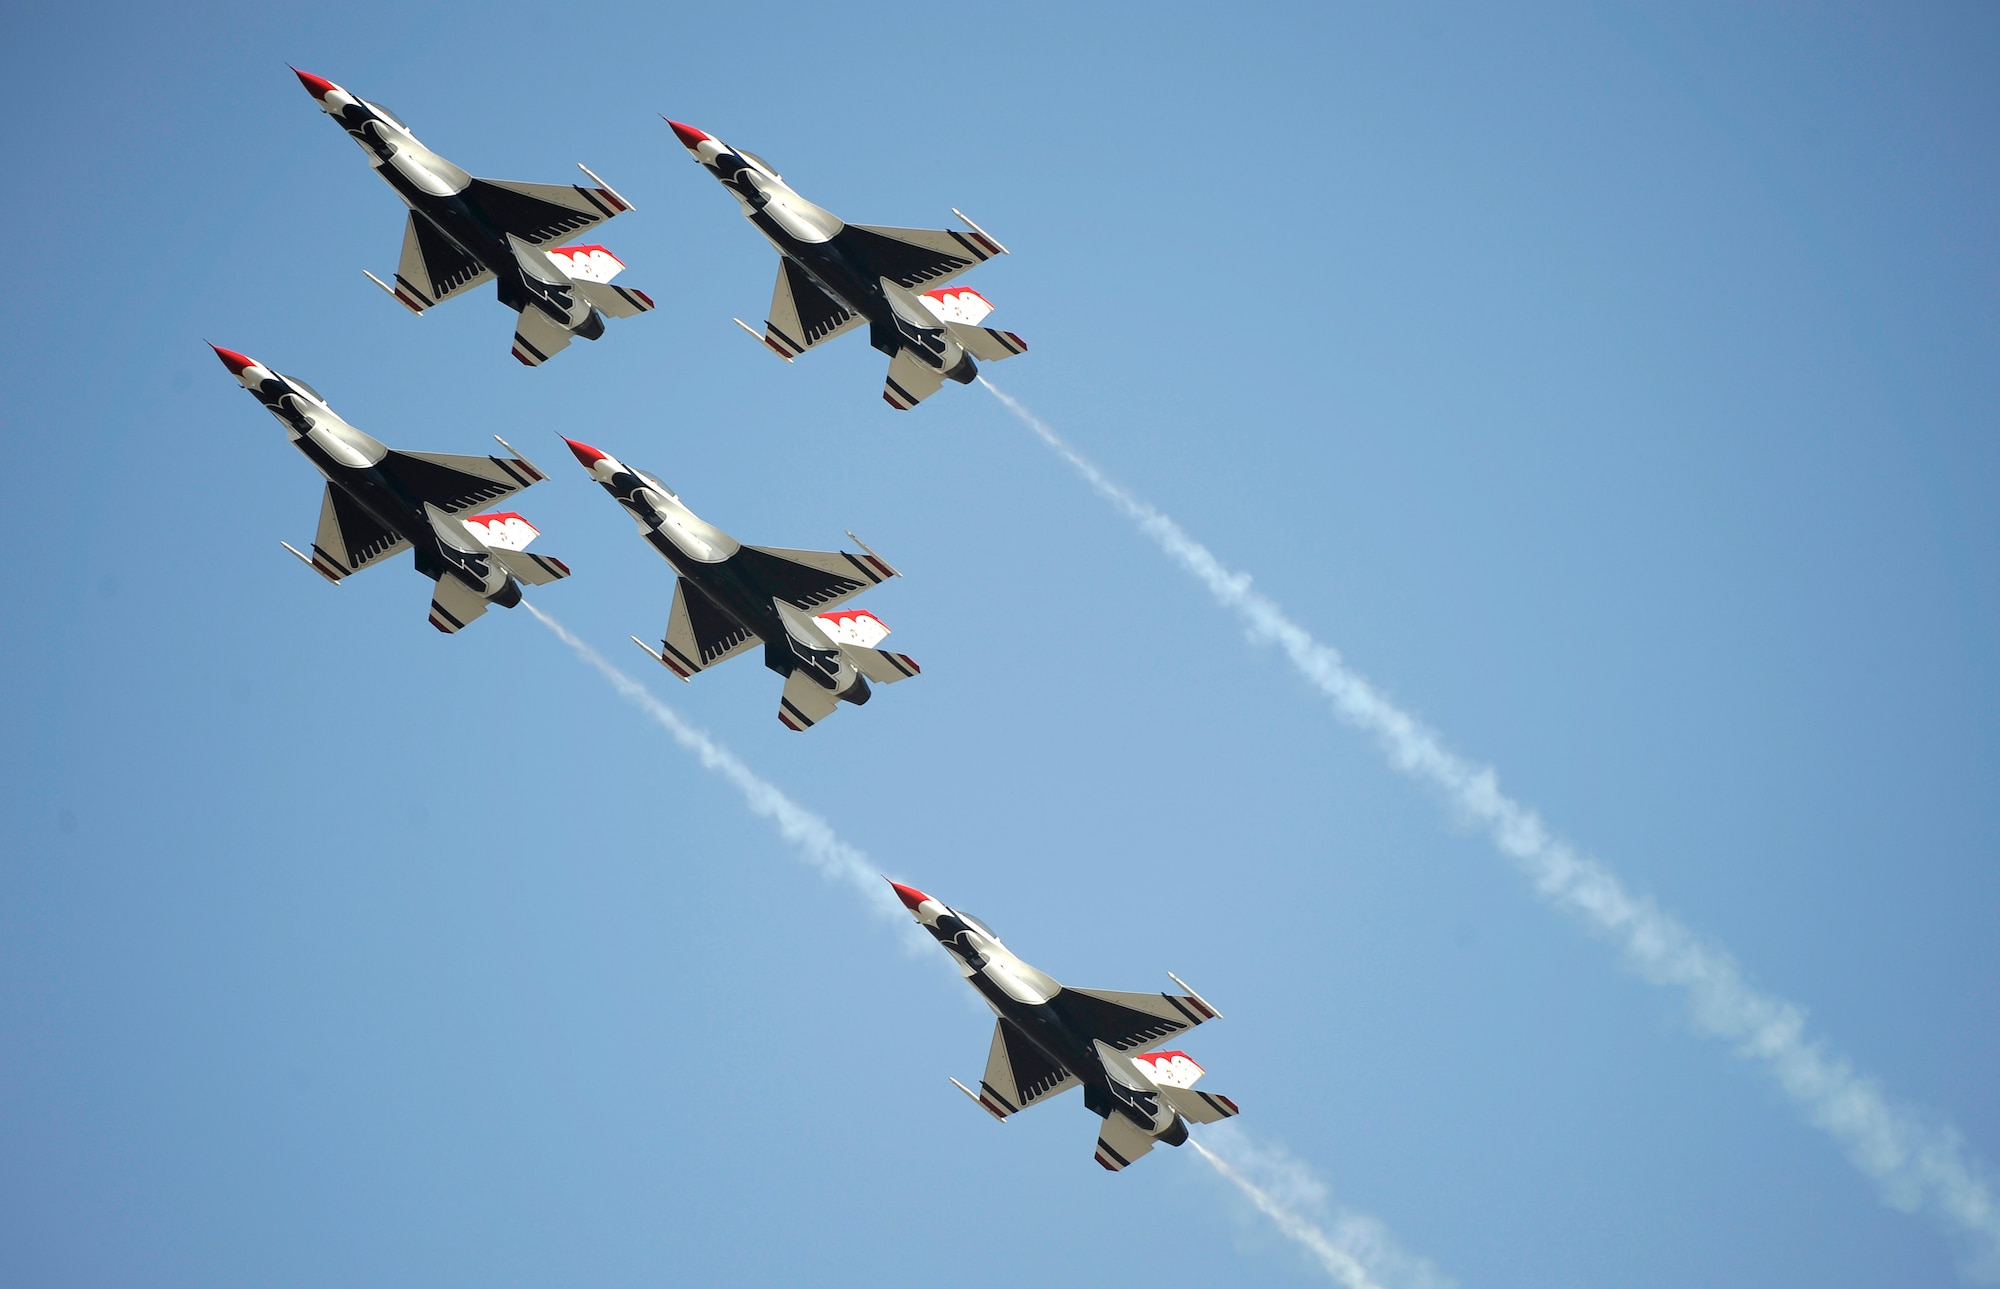 The U.S. Air Force Thunderbirds perform during Air Power Day at Osan Air Base, Republic of Korea, Oct. 21. (U.S. Air Force photo/Staff Sgt. Brian Ferguson)